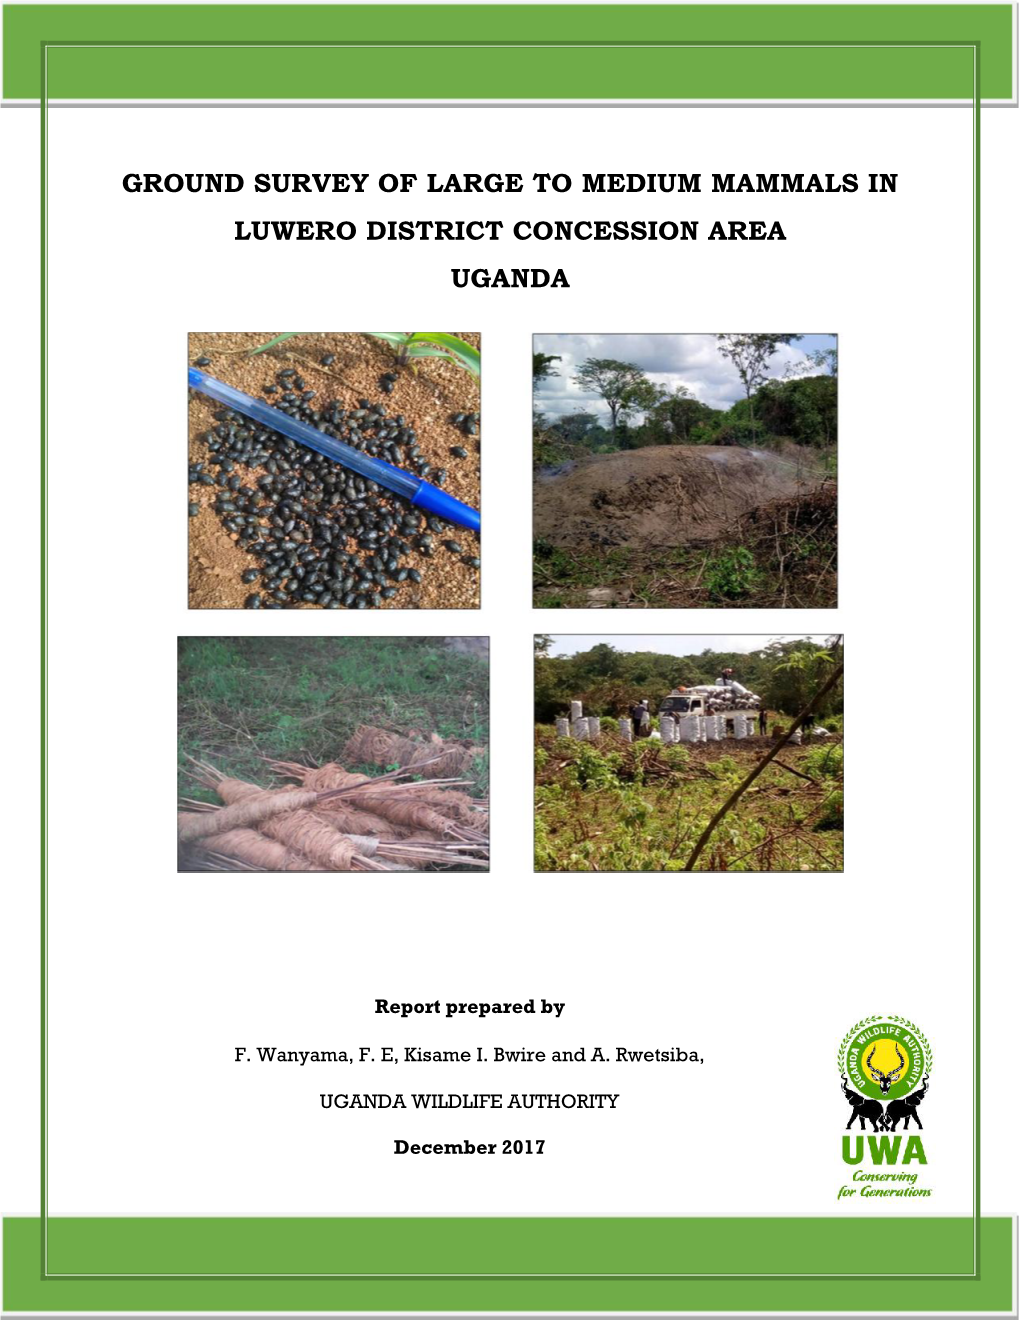 Ground Survey of Large to Medium Mammals in Luwero District Concession Area Uganda